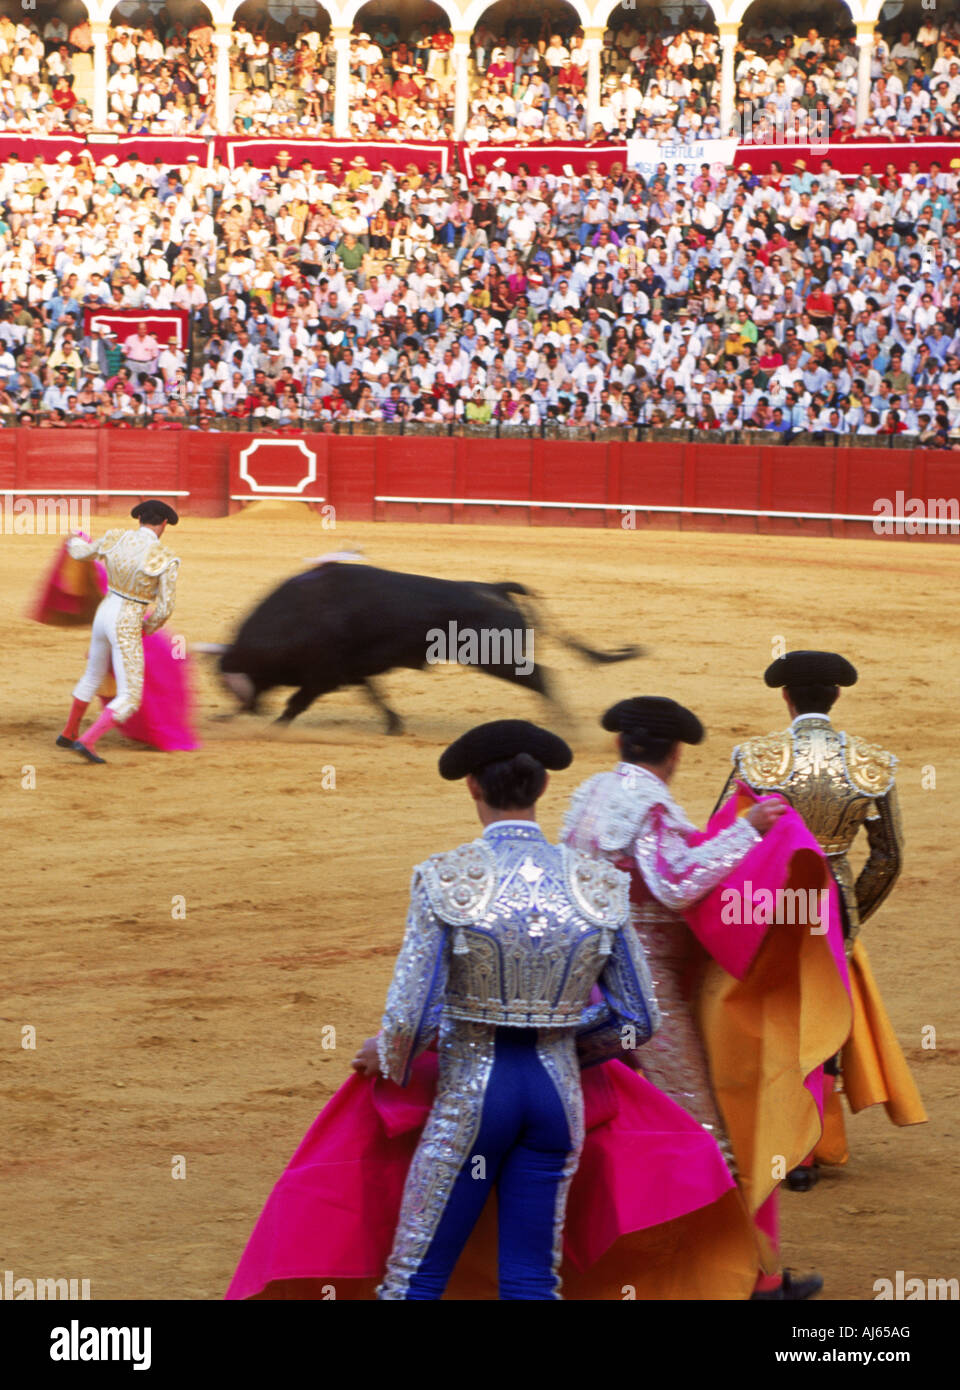 Toreadors with bull at Maestranza Bullring in Seville (Sevilla), Spain Stock Photo